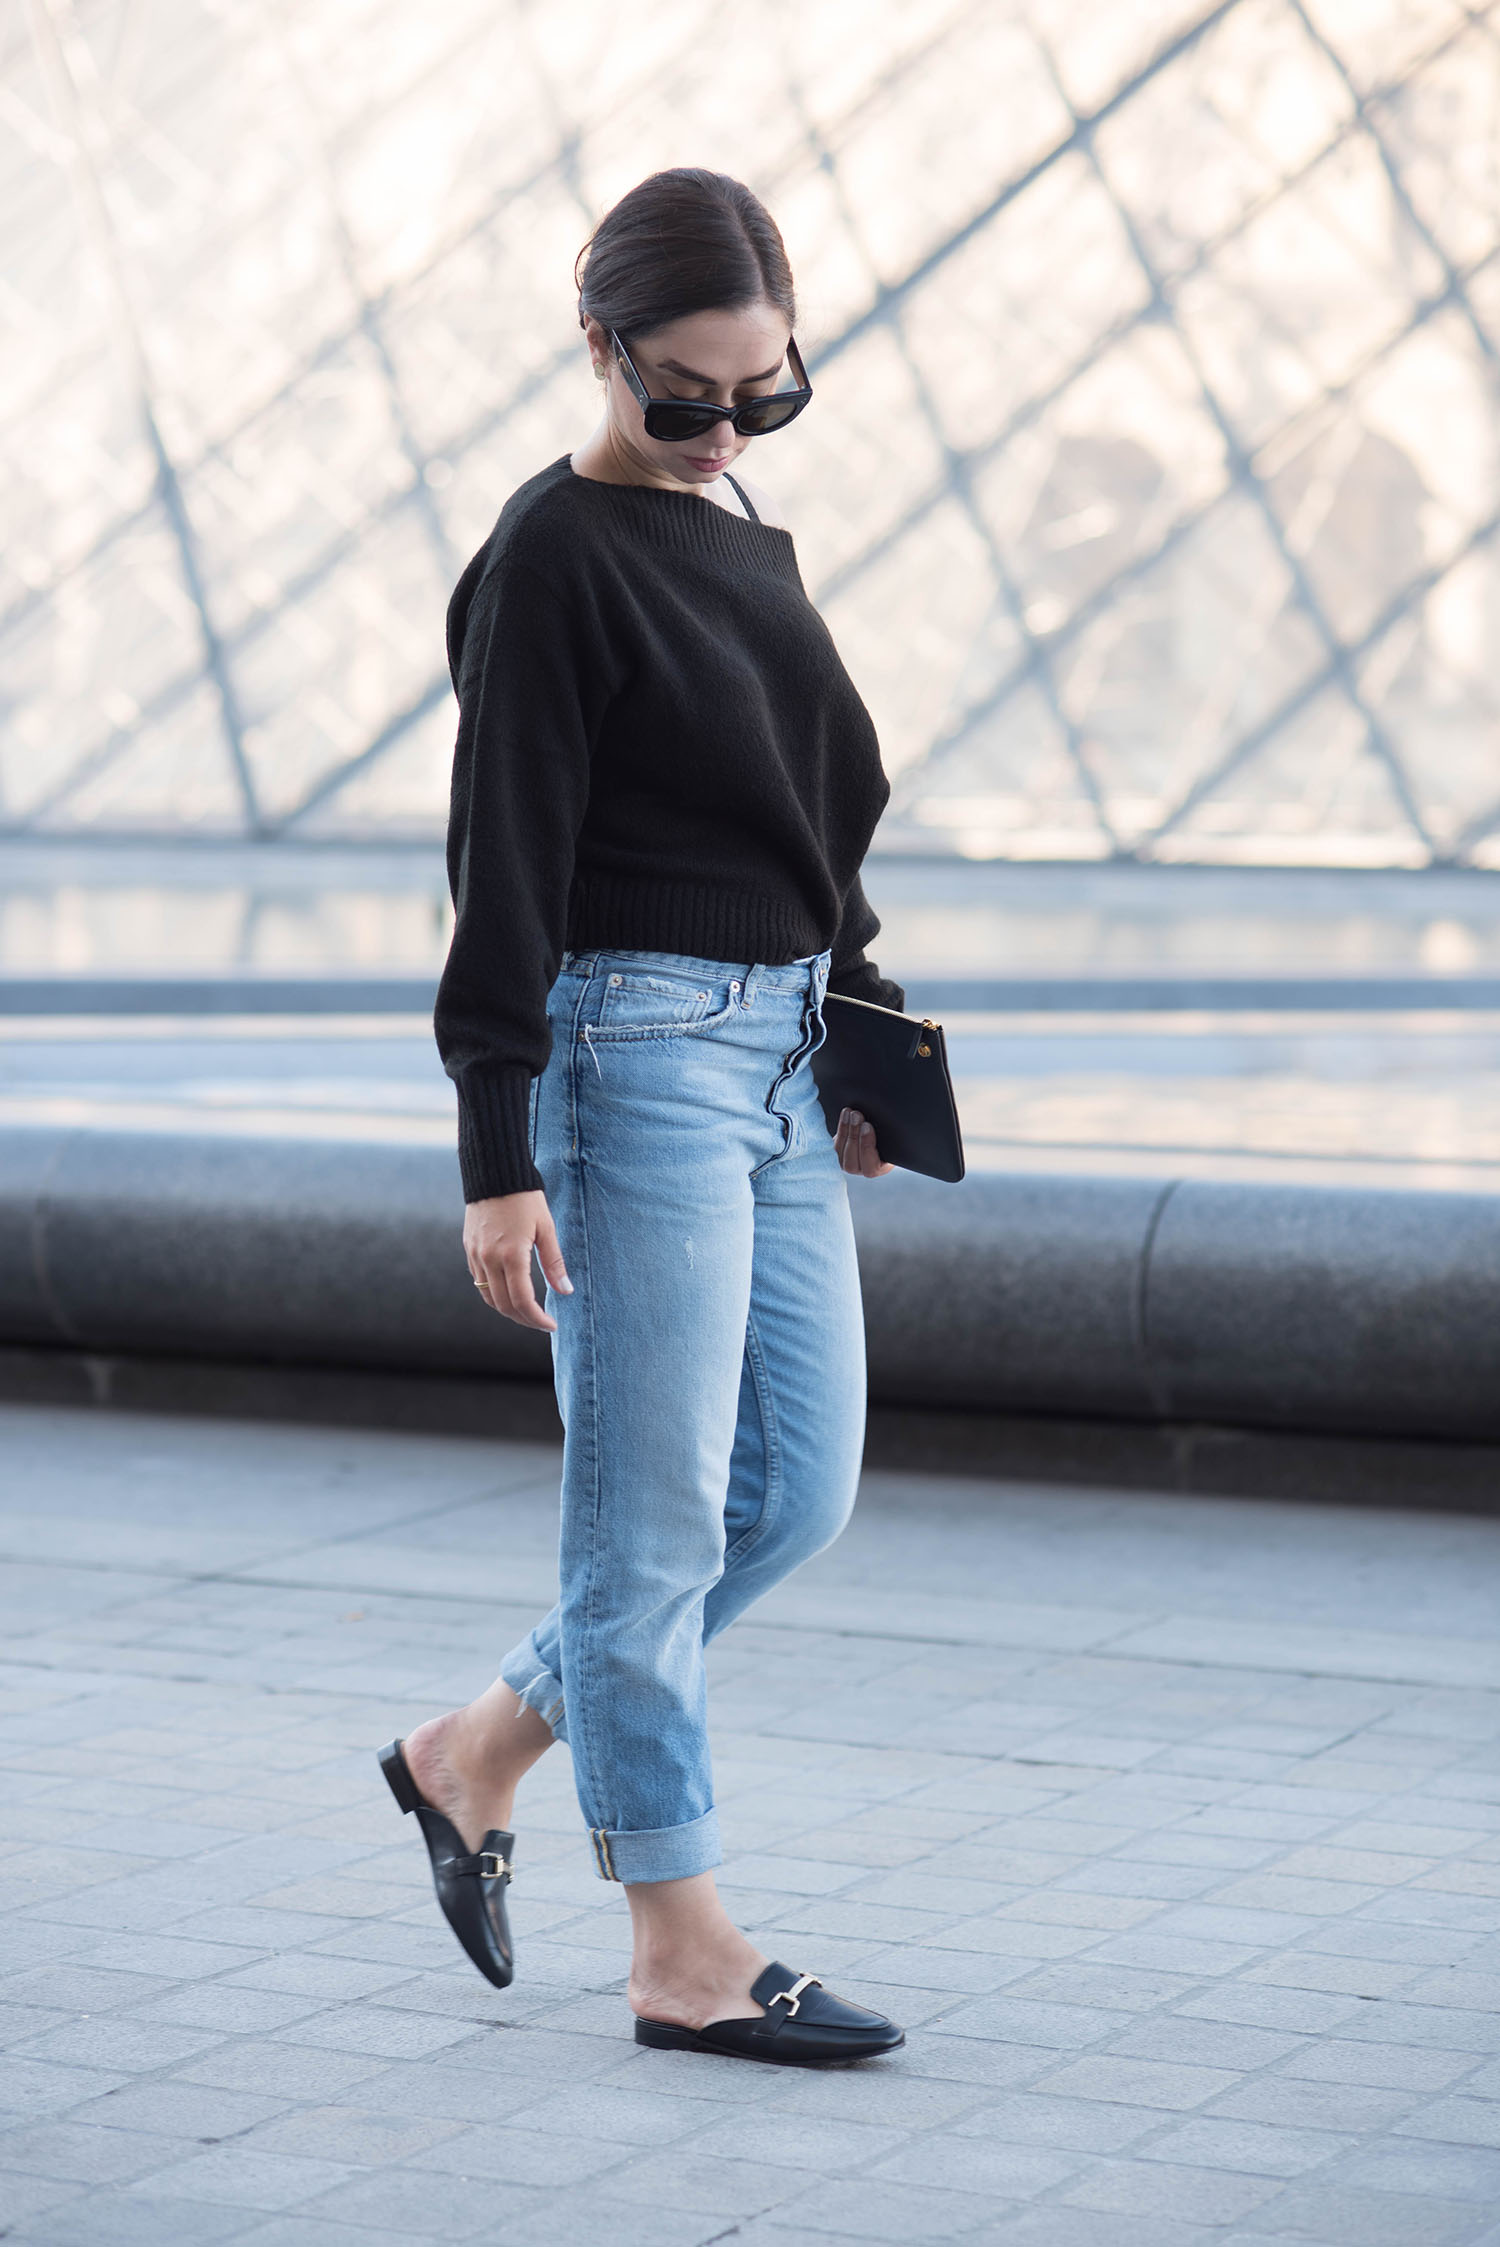 Fashion blogger Cee Fardoe of Coco & Vera stands outside the Louvre in Paris wearing Jonak mules and Zara boyfriend jeans